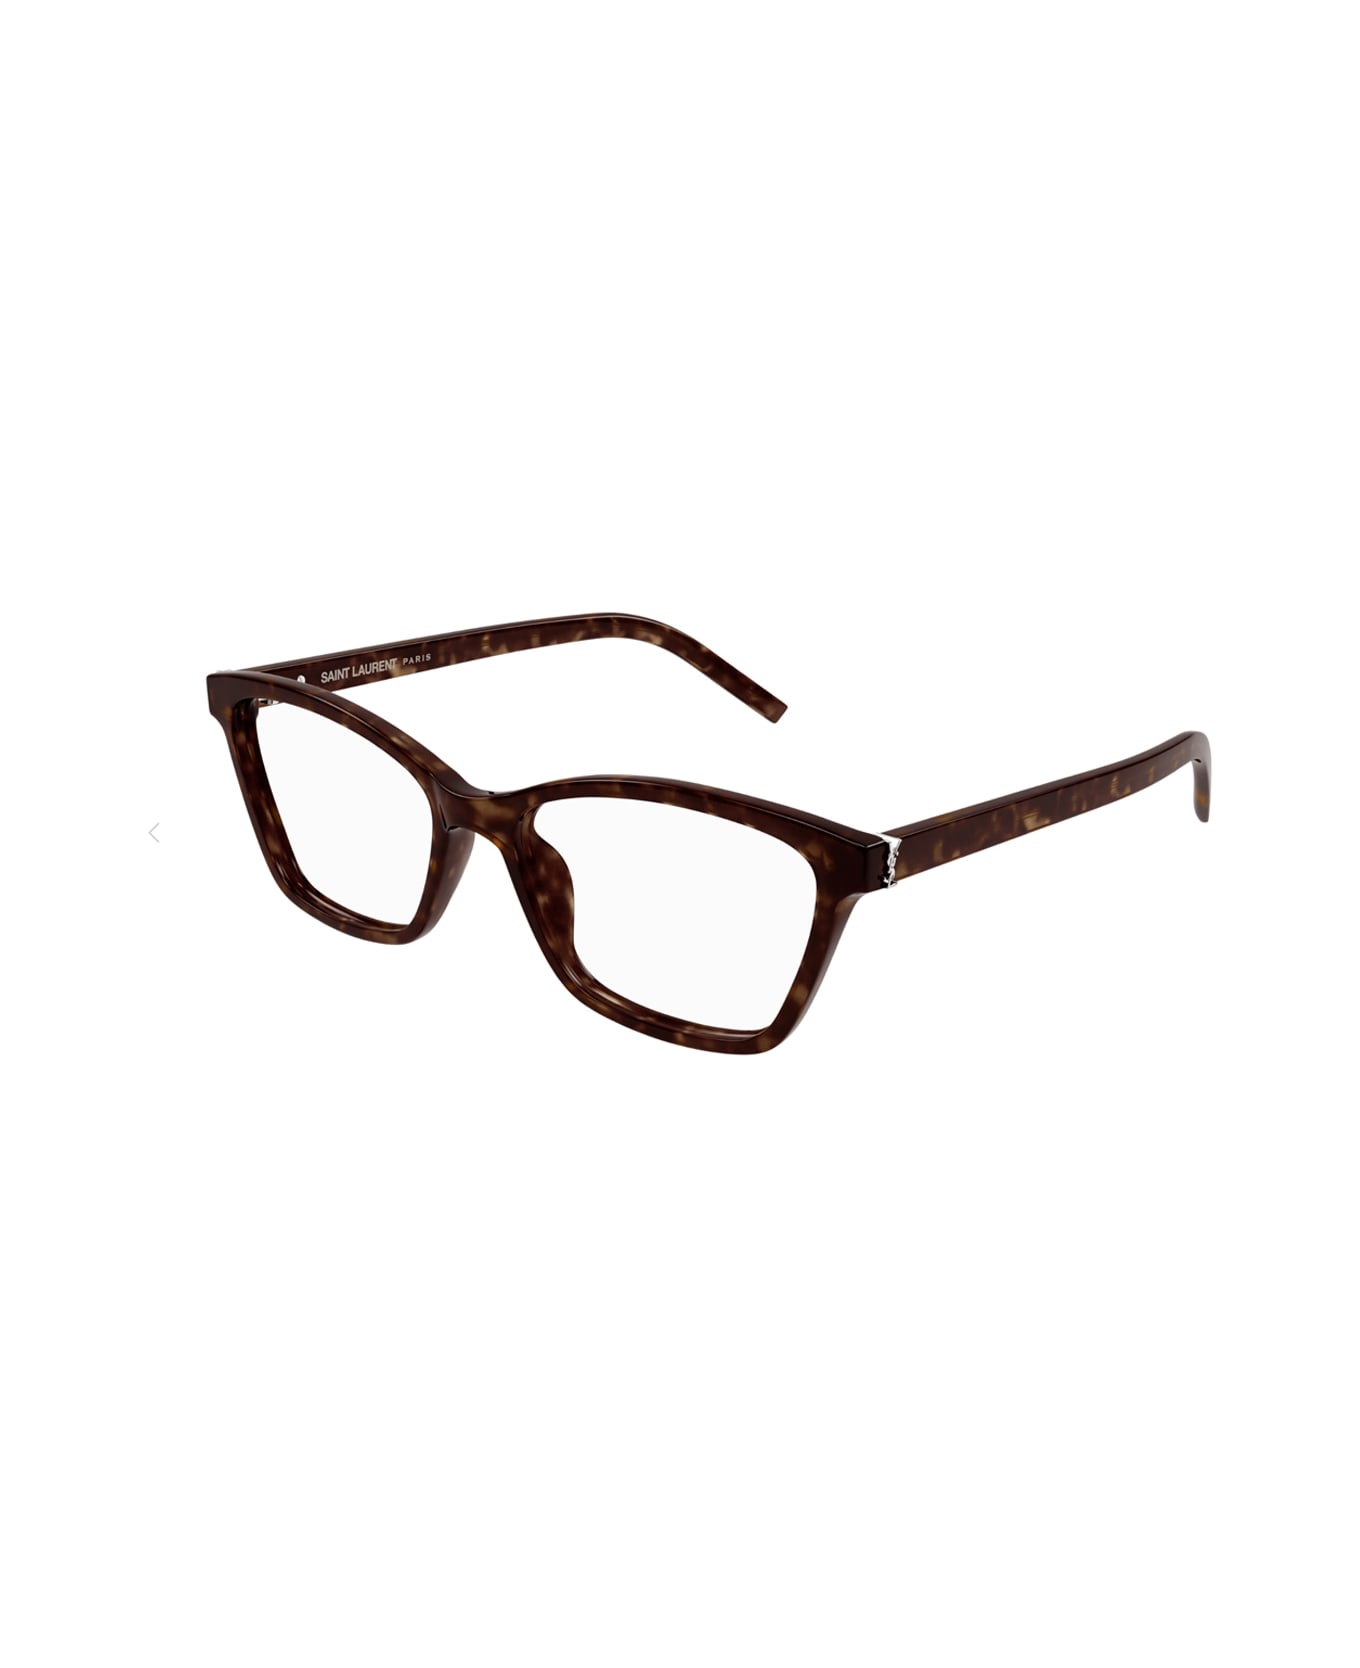 Saint Laurent Eyewear Sl M128 006 Glasses - Marrone